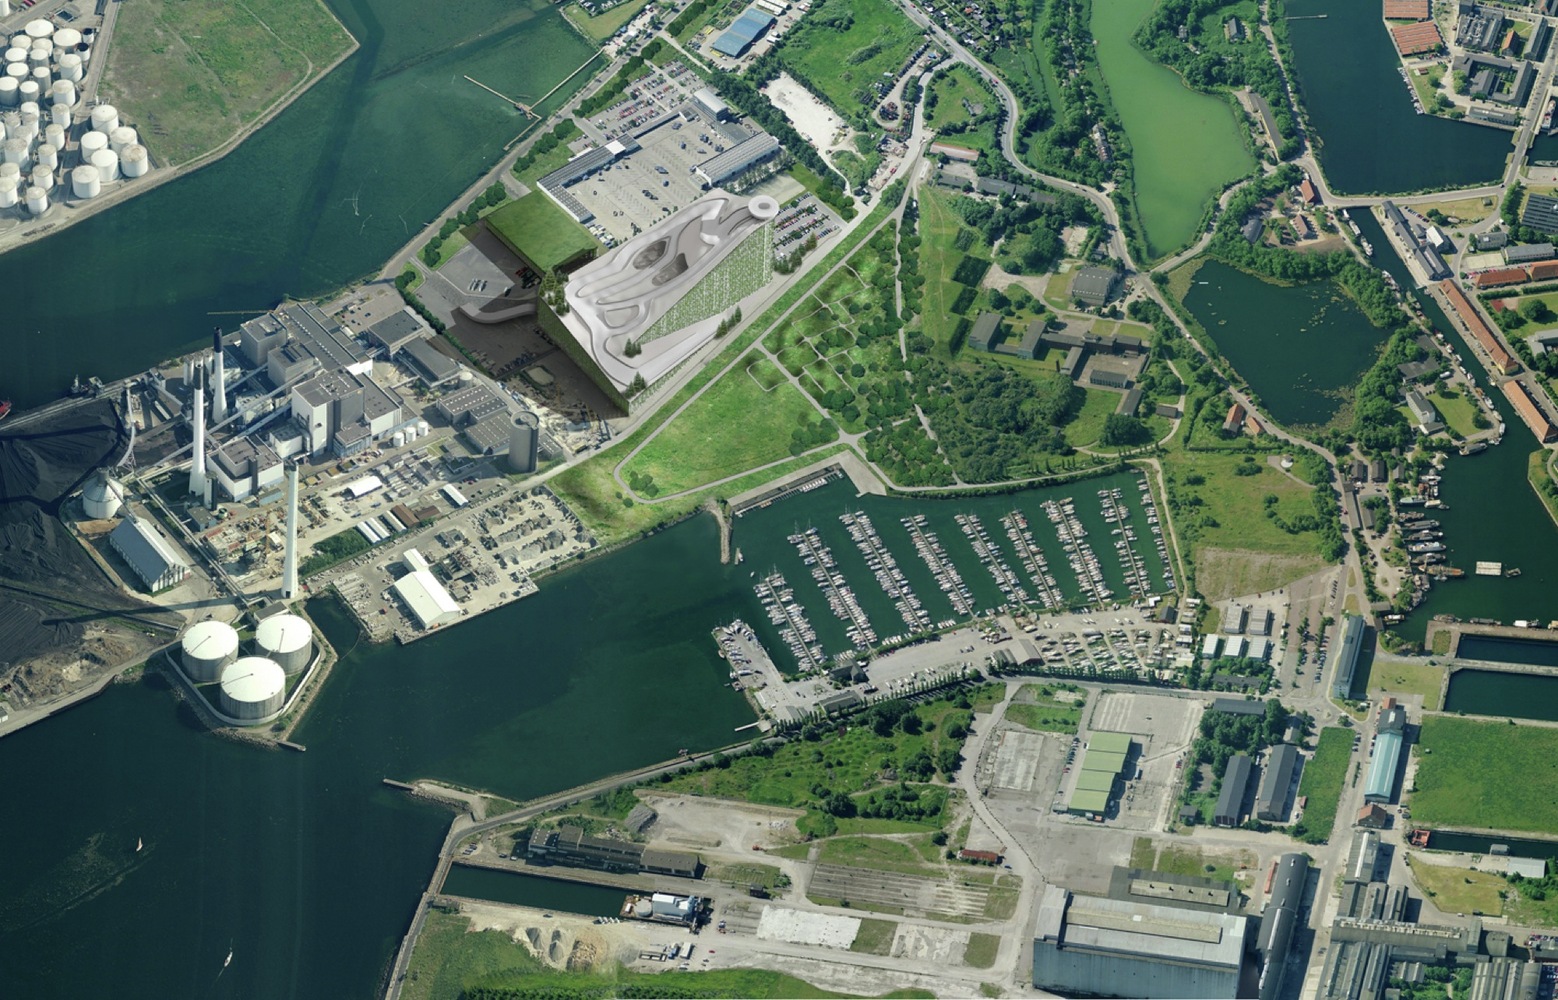 Copenhagens power plant with ski slope5